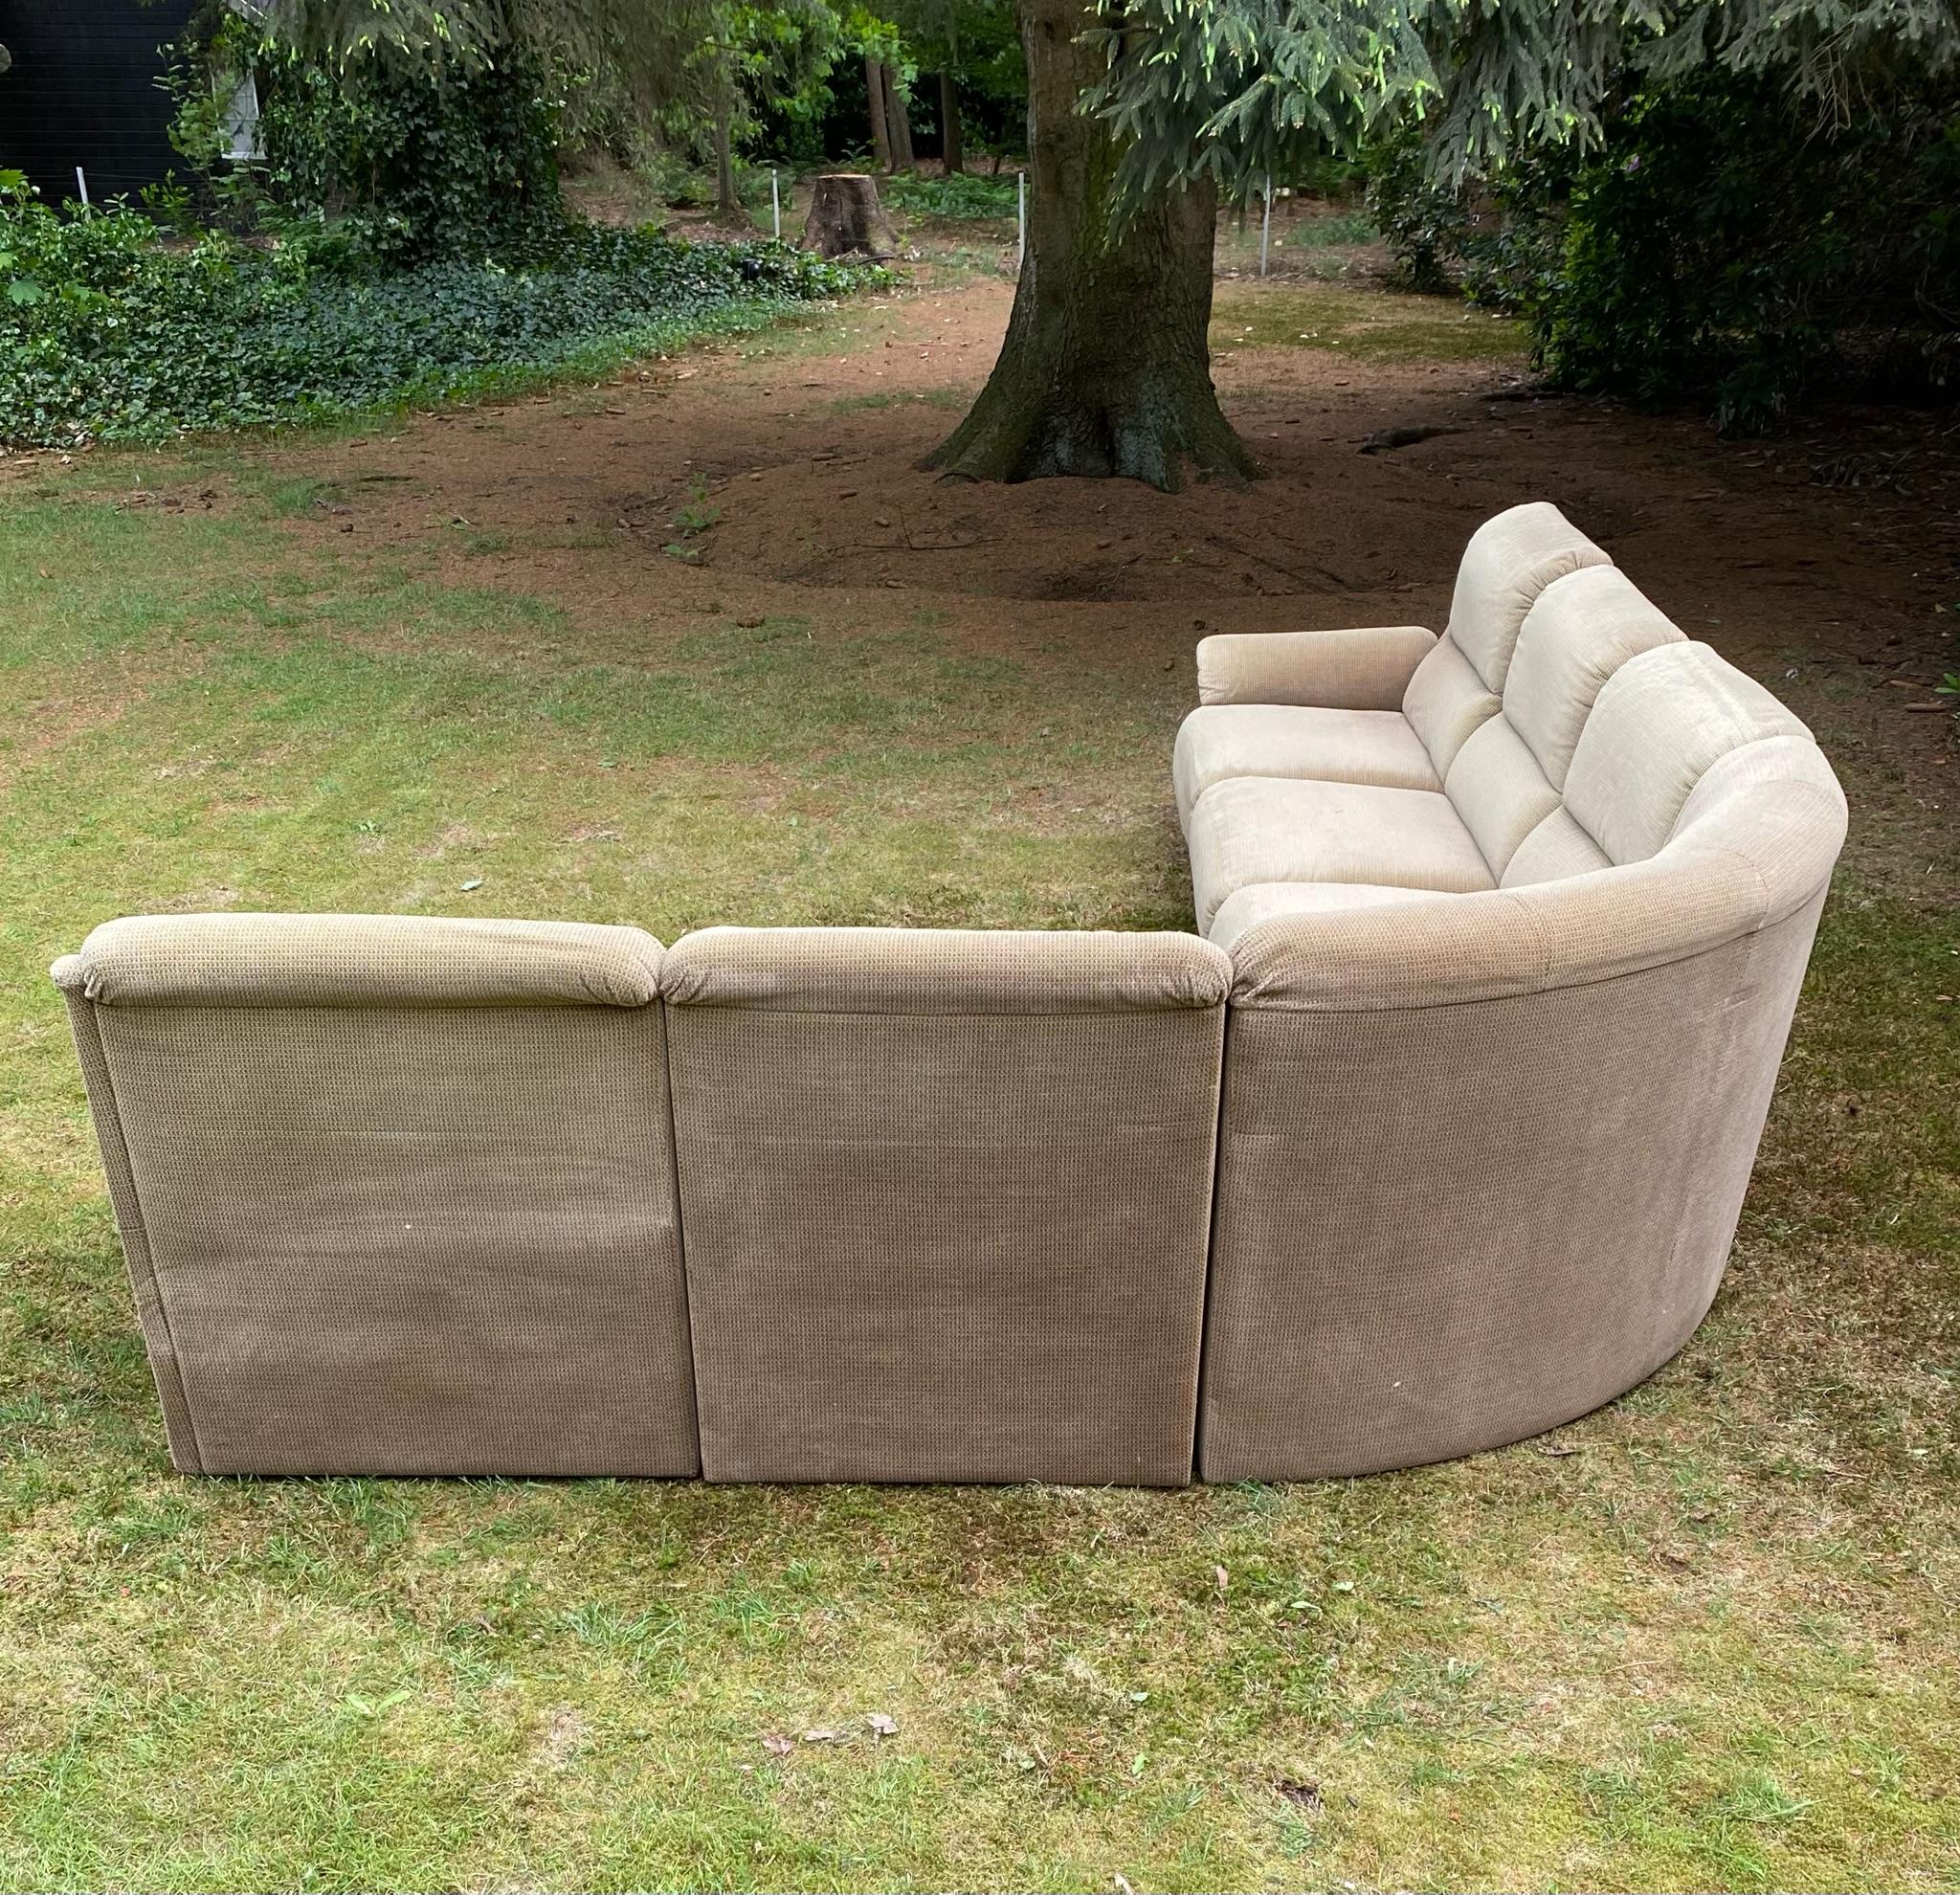 1960s sectional sofa